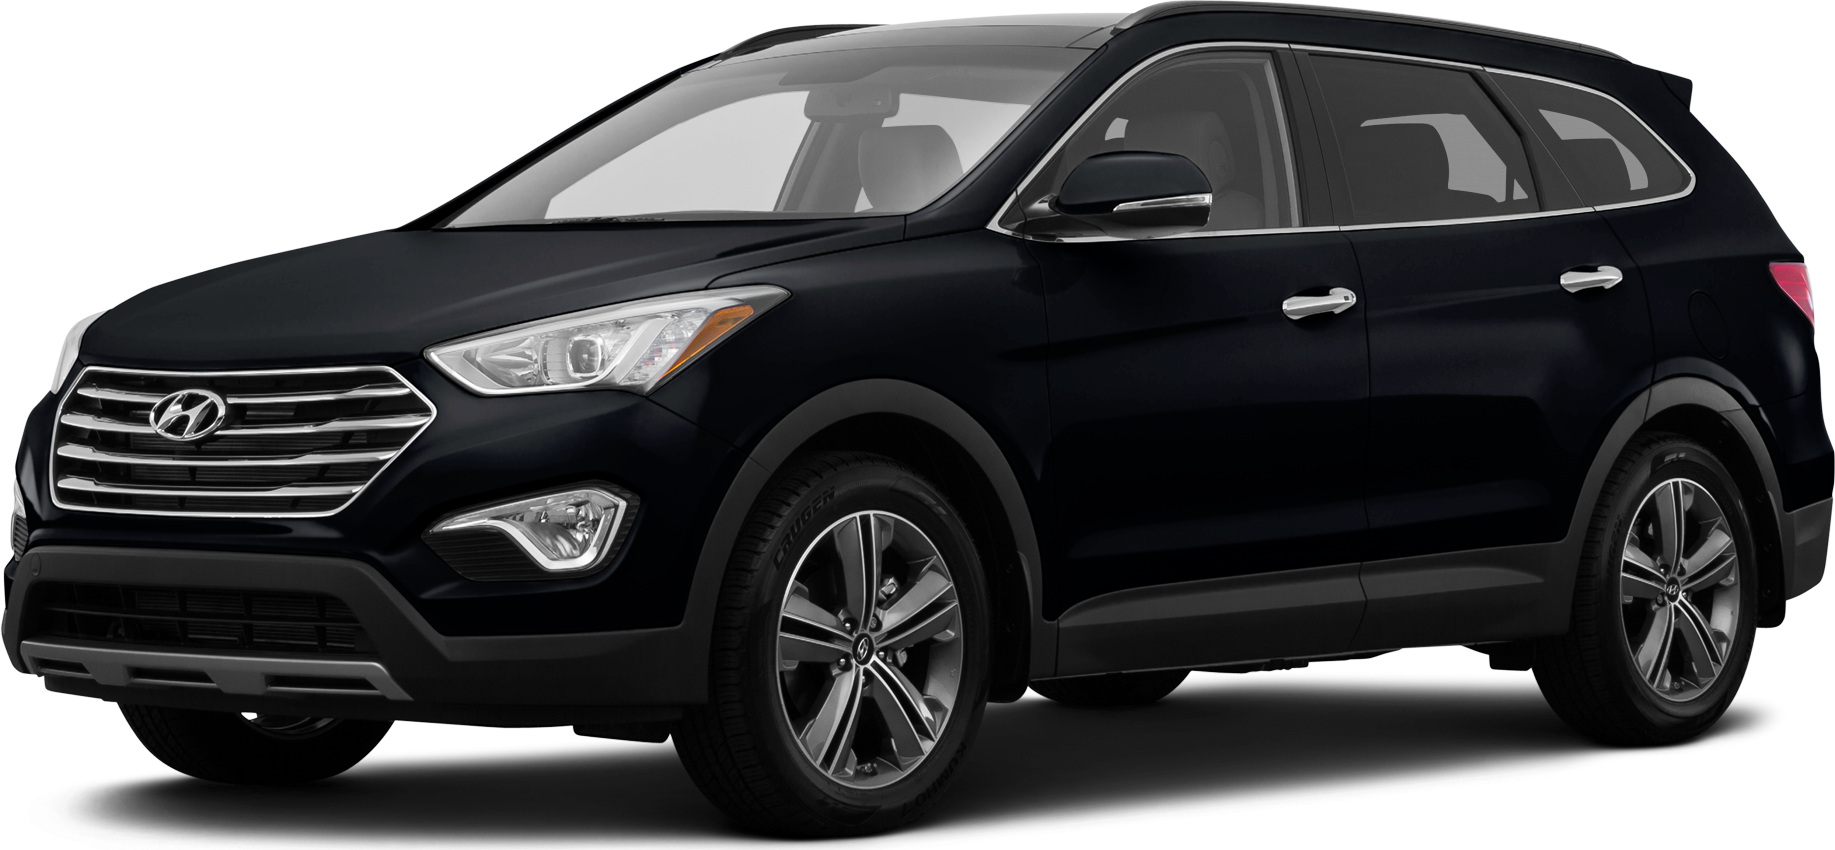 2016 Hyundai Santa Fe  Review and Road Test  YouTube